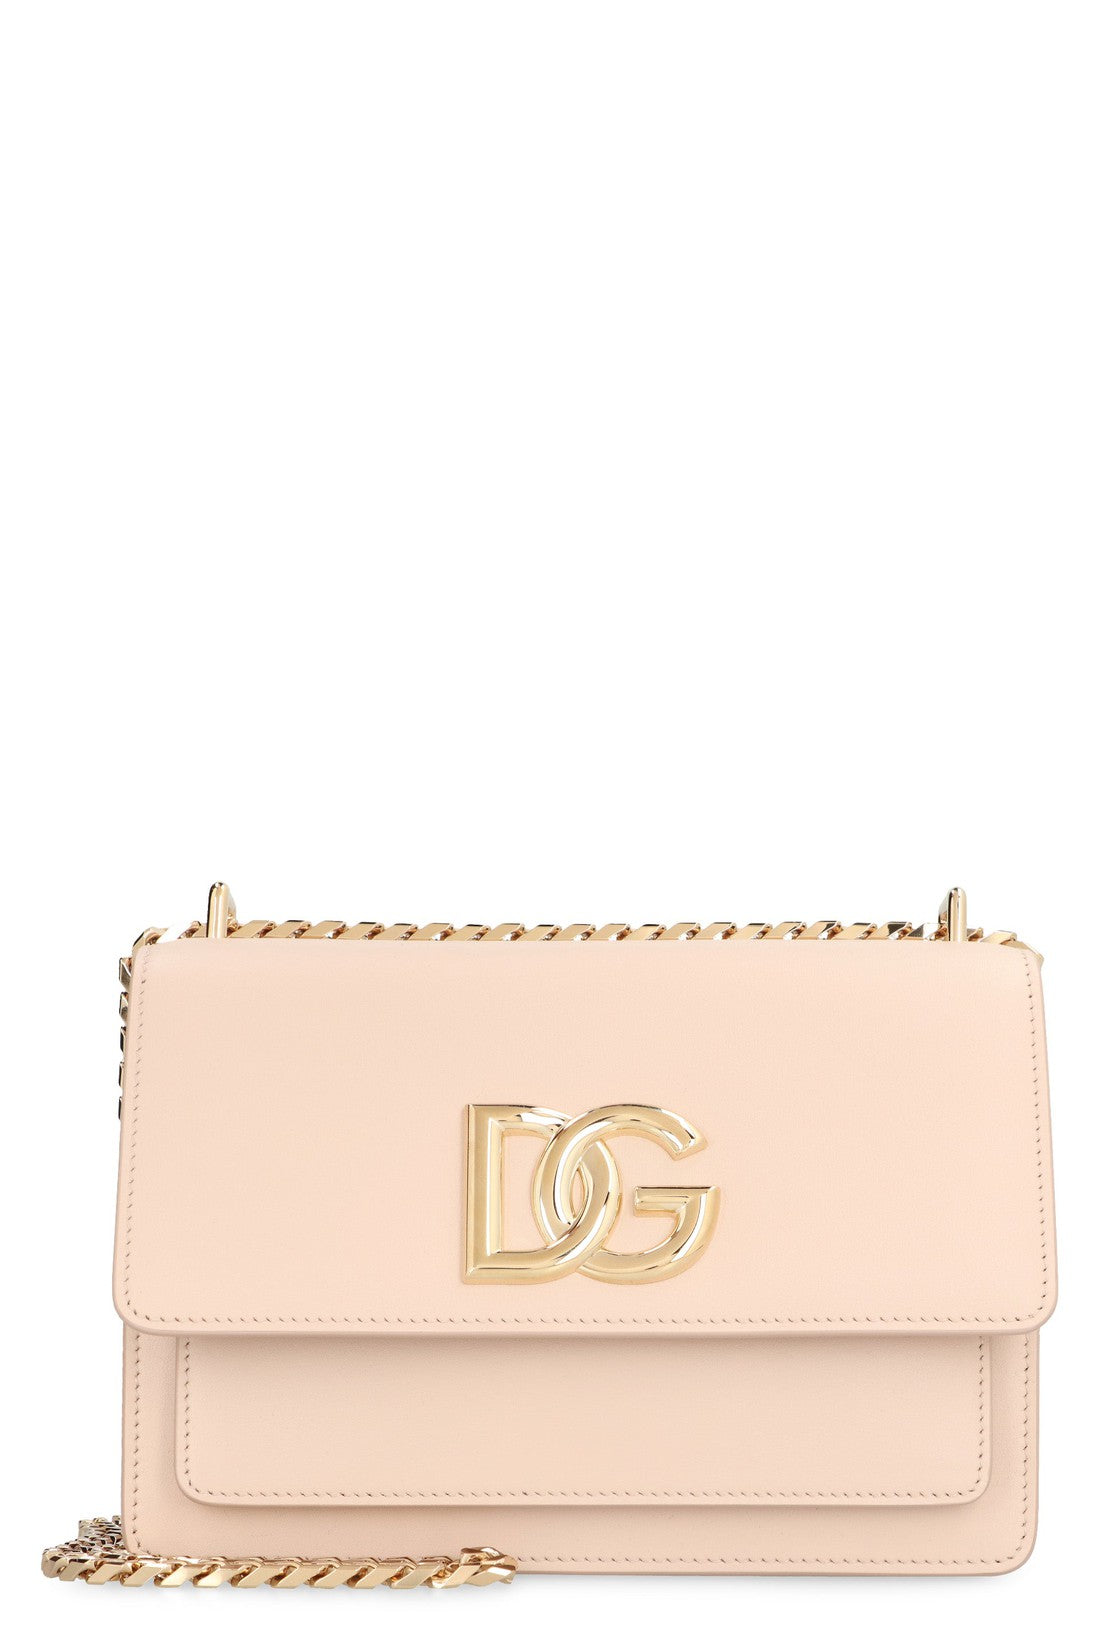 Dolce & Gabbana-OUTLET-SALE-3.5 Leather crossbody bag-ARCHIVIST